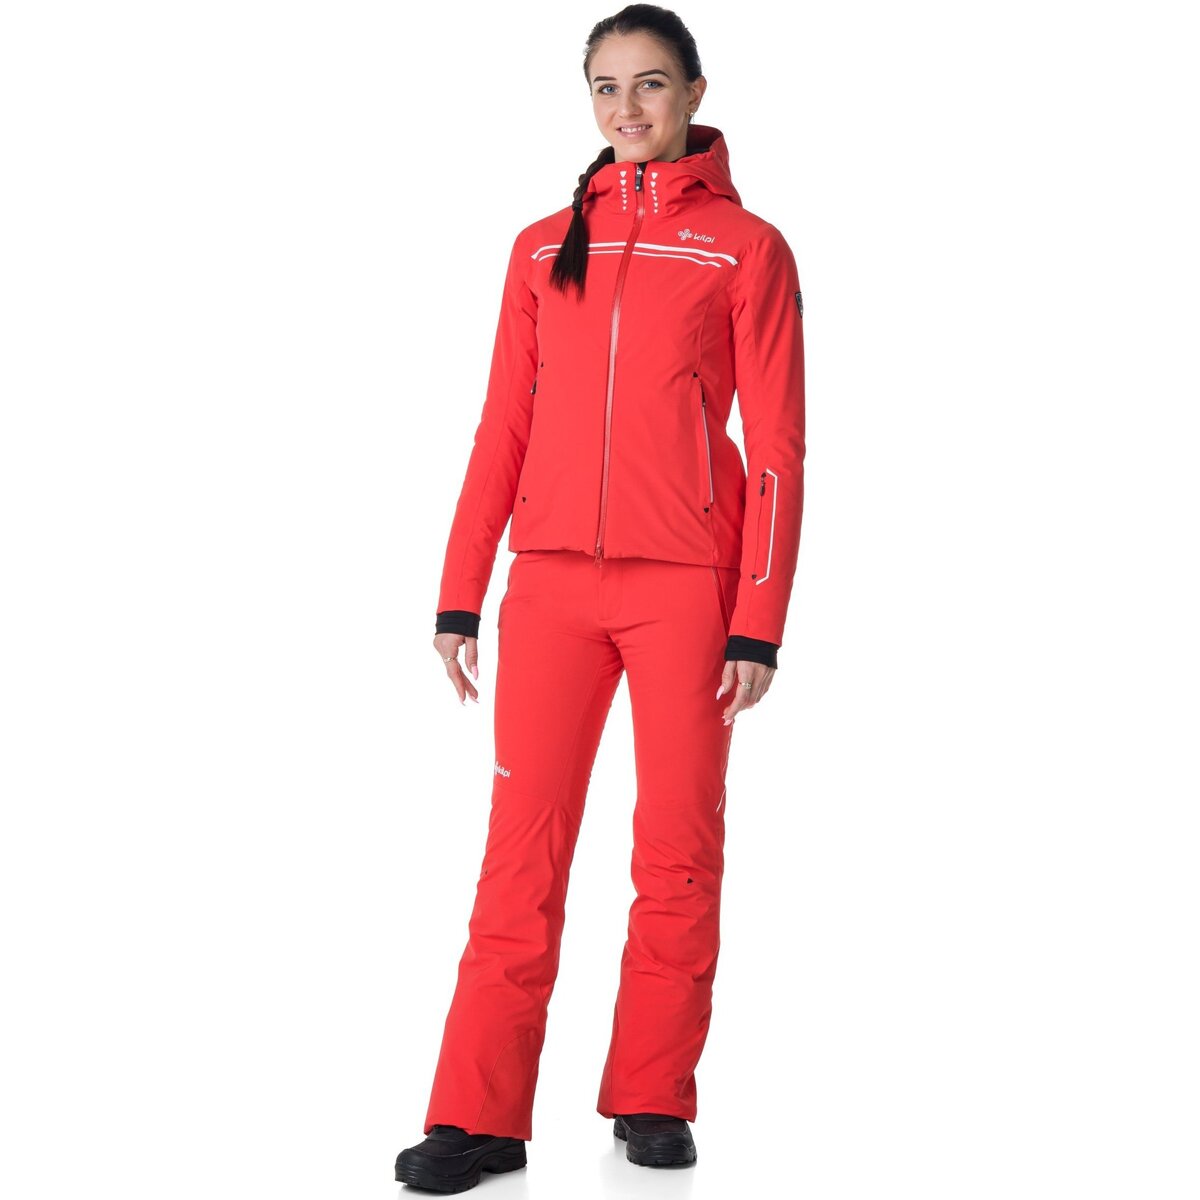 Kilpi Rouge Veste ski DERMIZAX PRIMALOFT femme CORTINI-W R8mqPC3x